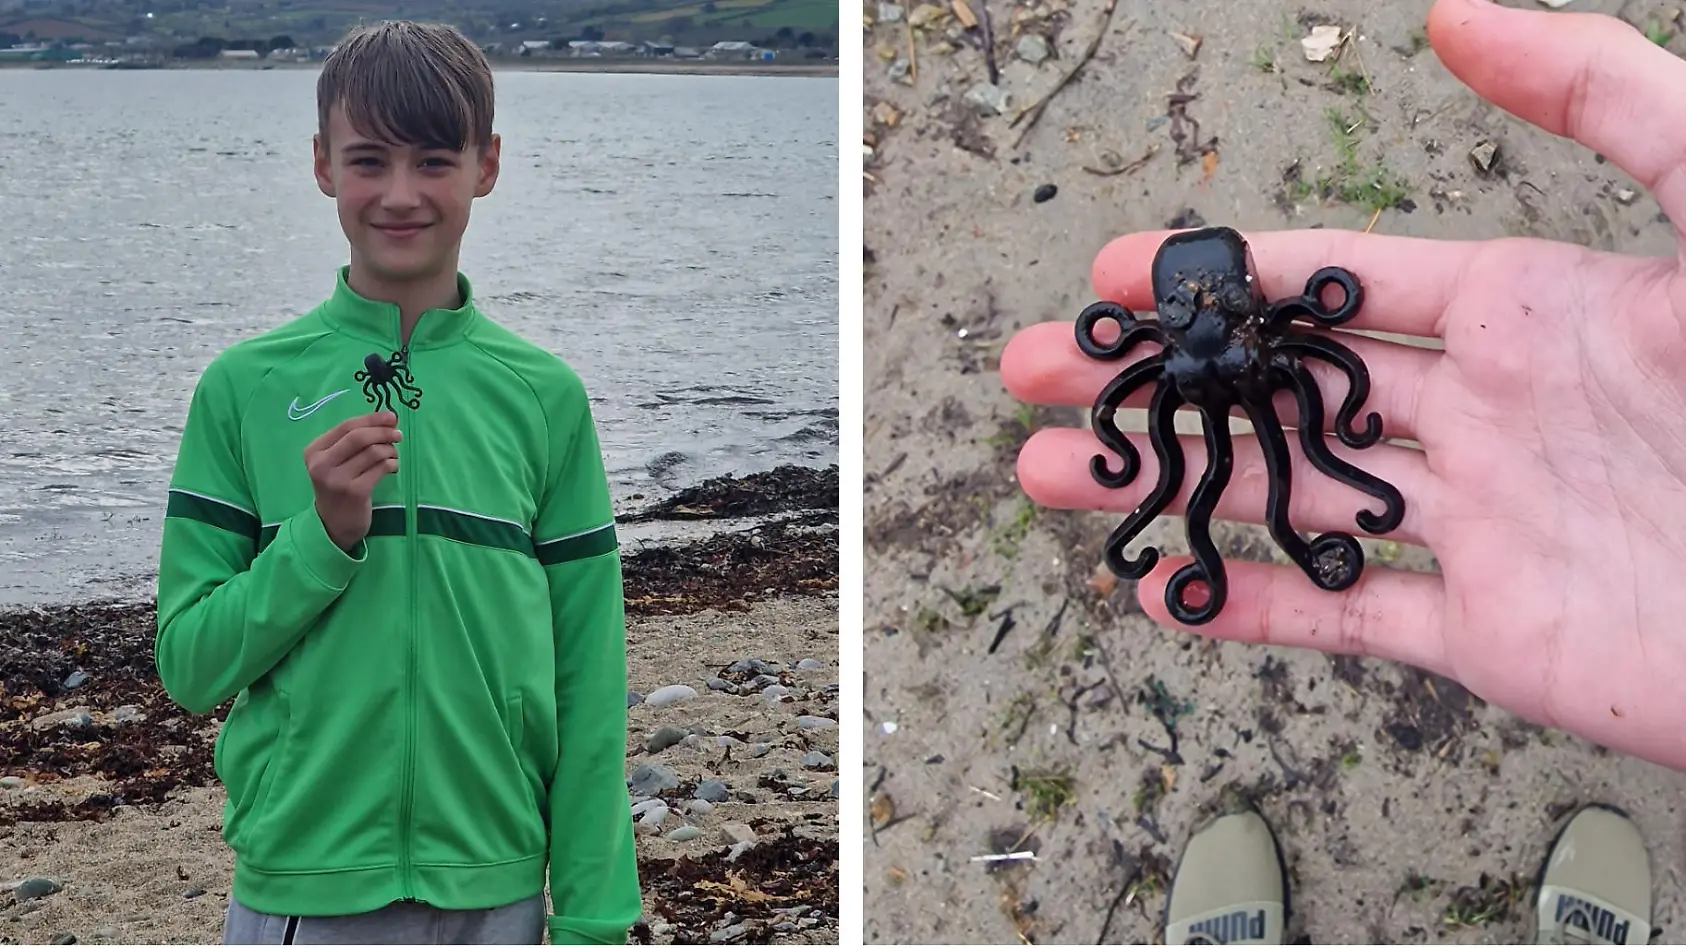 Junge findet seltenen Lego-Oktopus